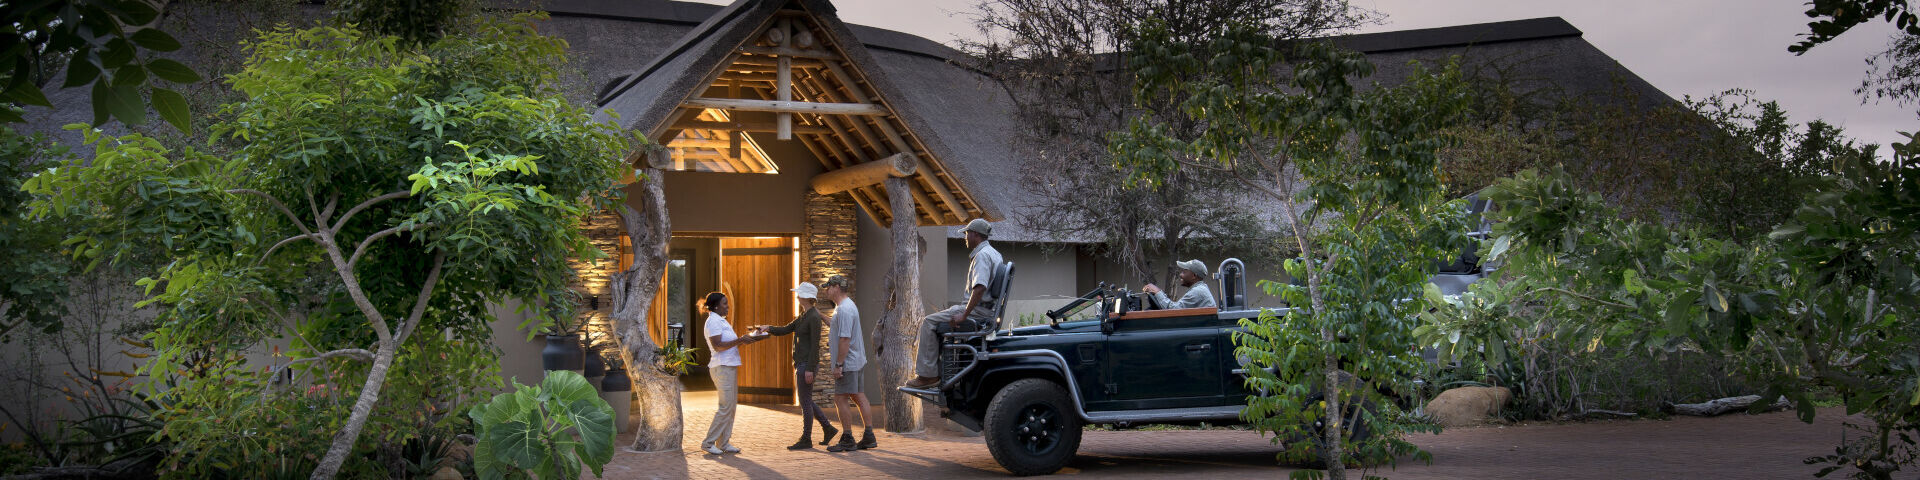 Banner Rock Fig Safari Lodge Timbavati South Africa